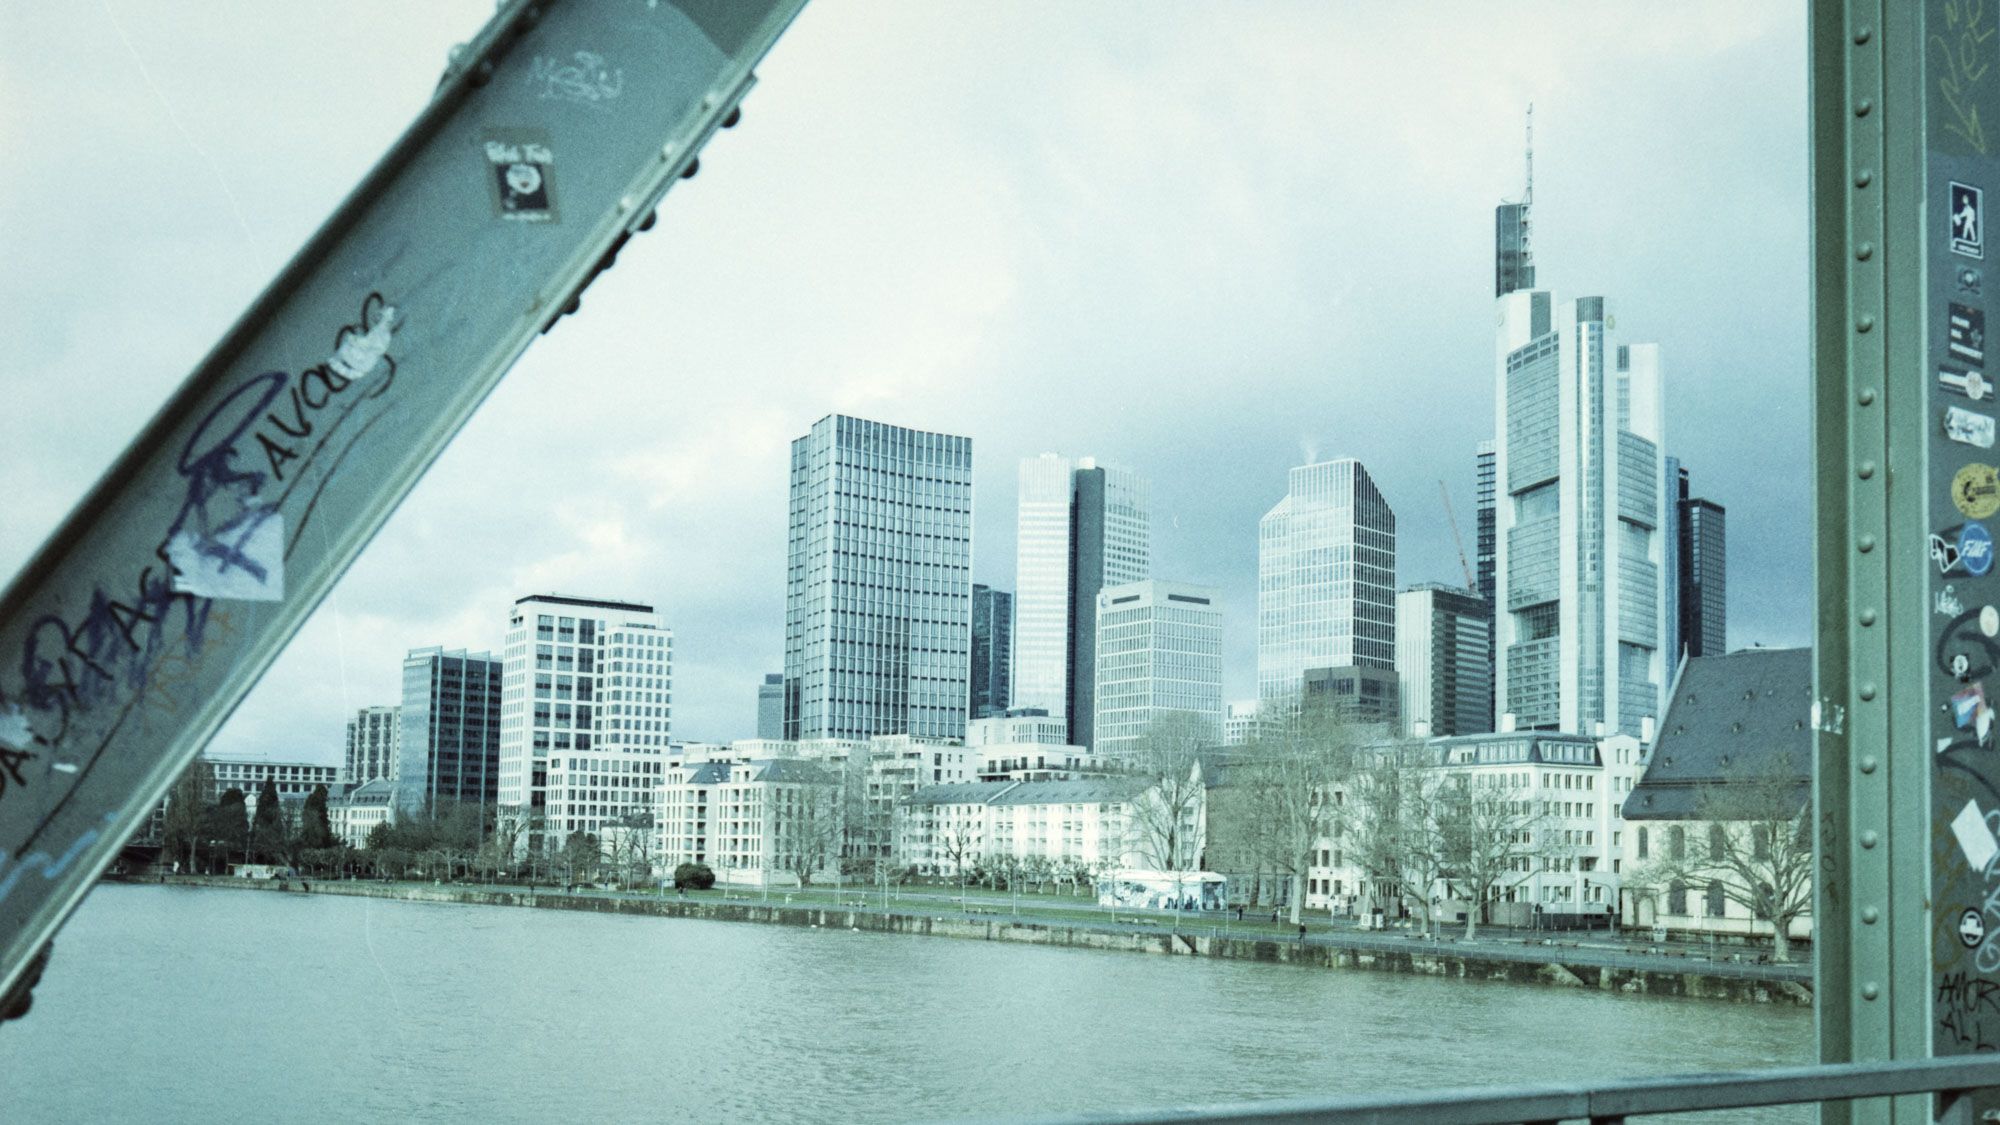 Skyline of Frankfurt am Main framed view through the bridge construction.